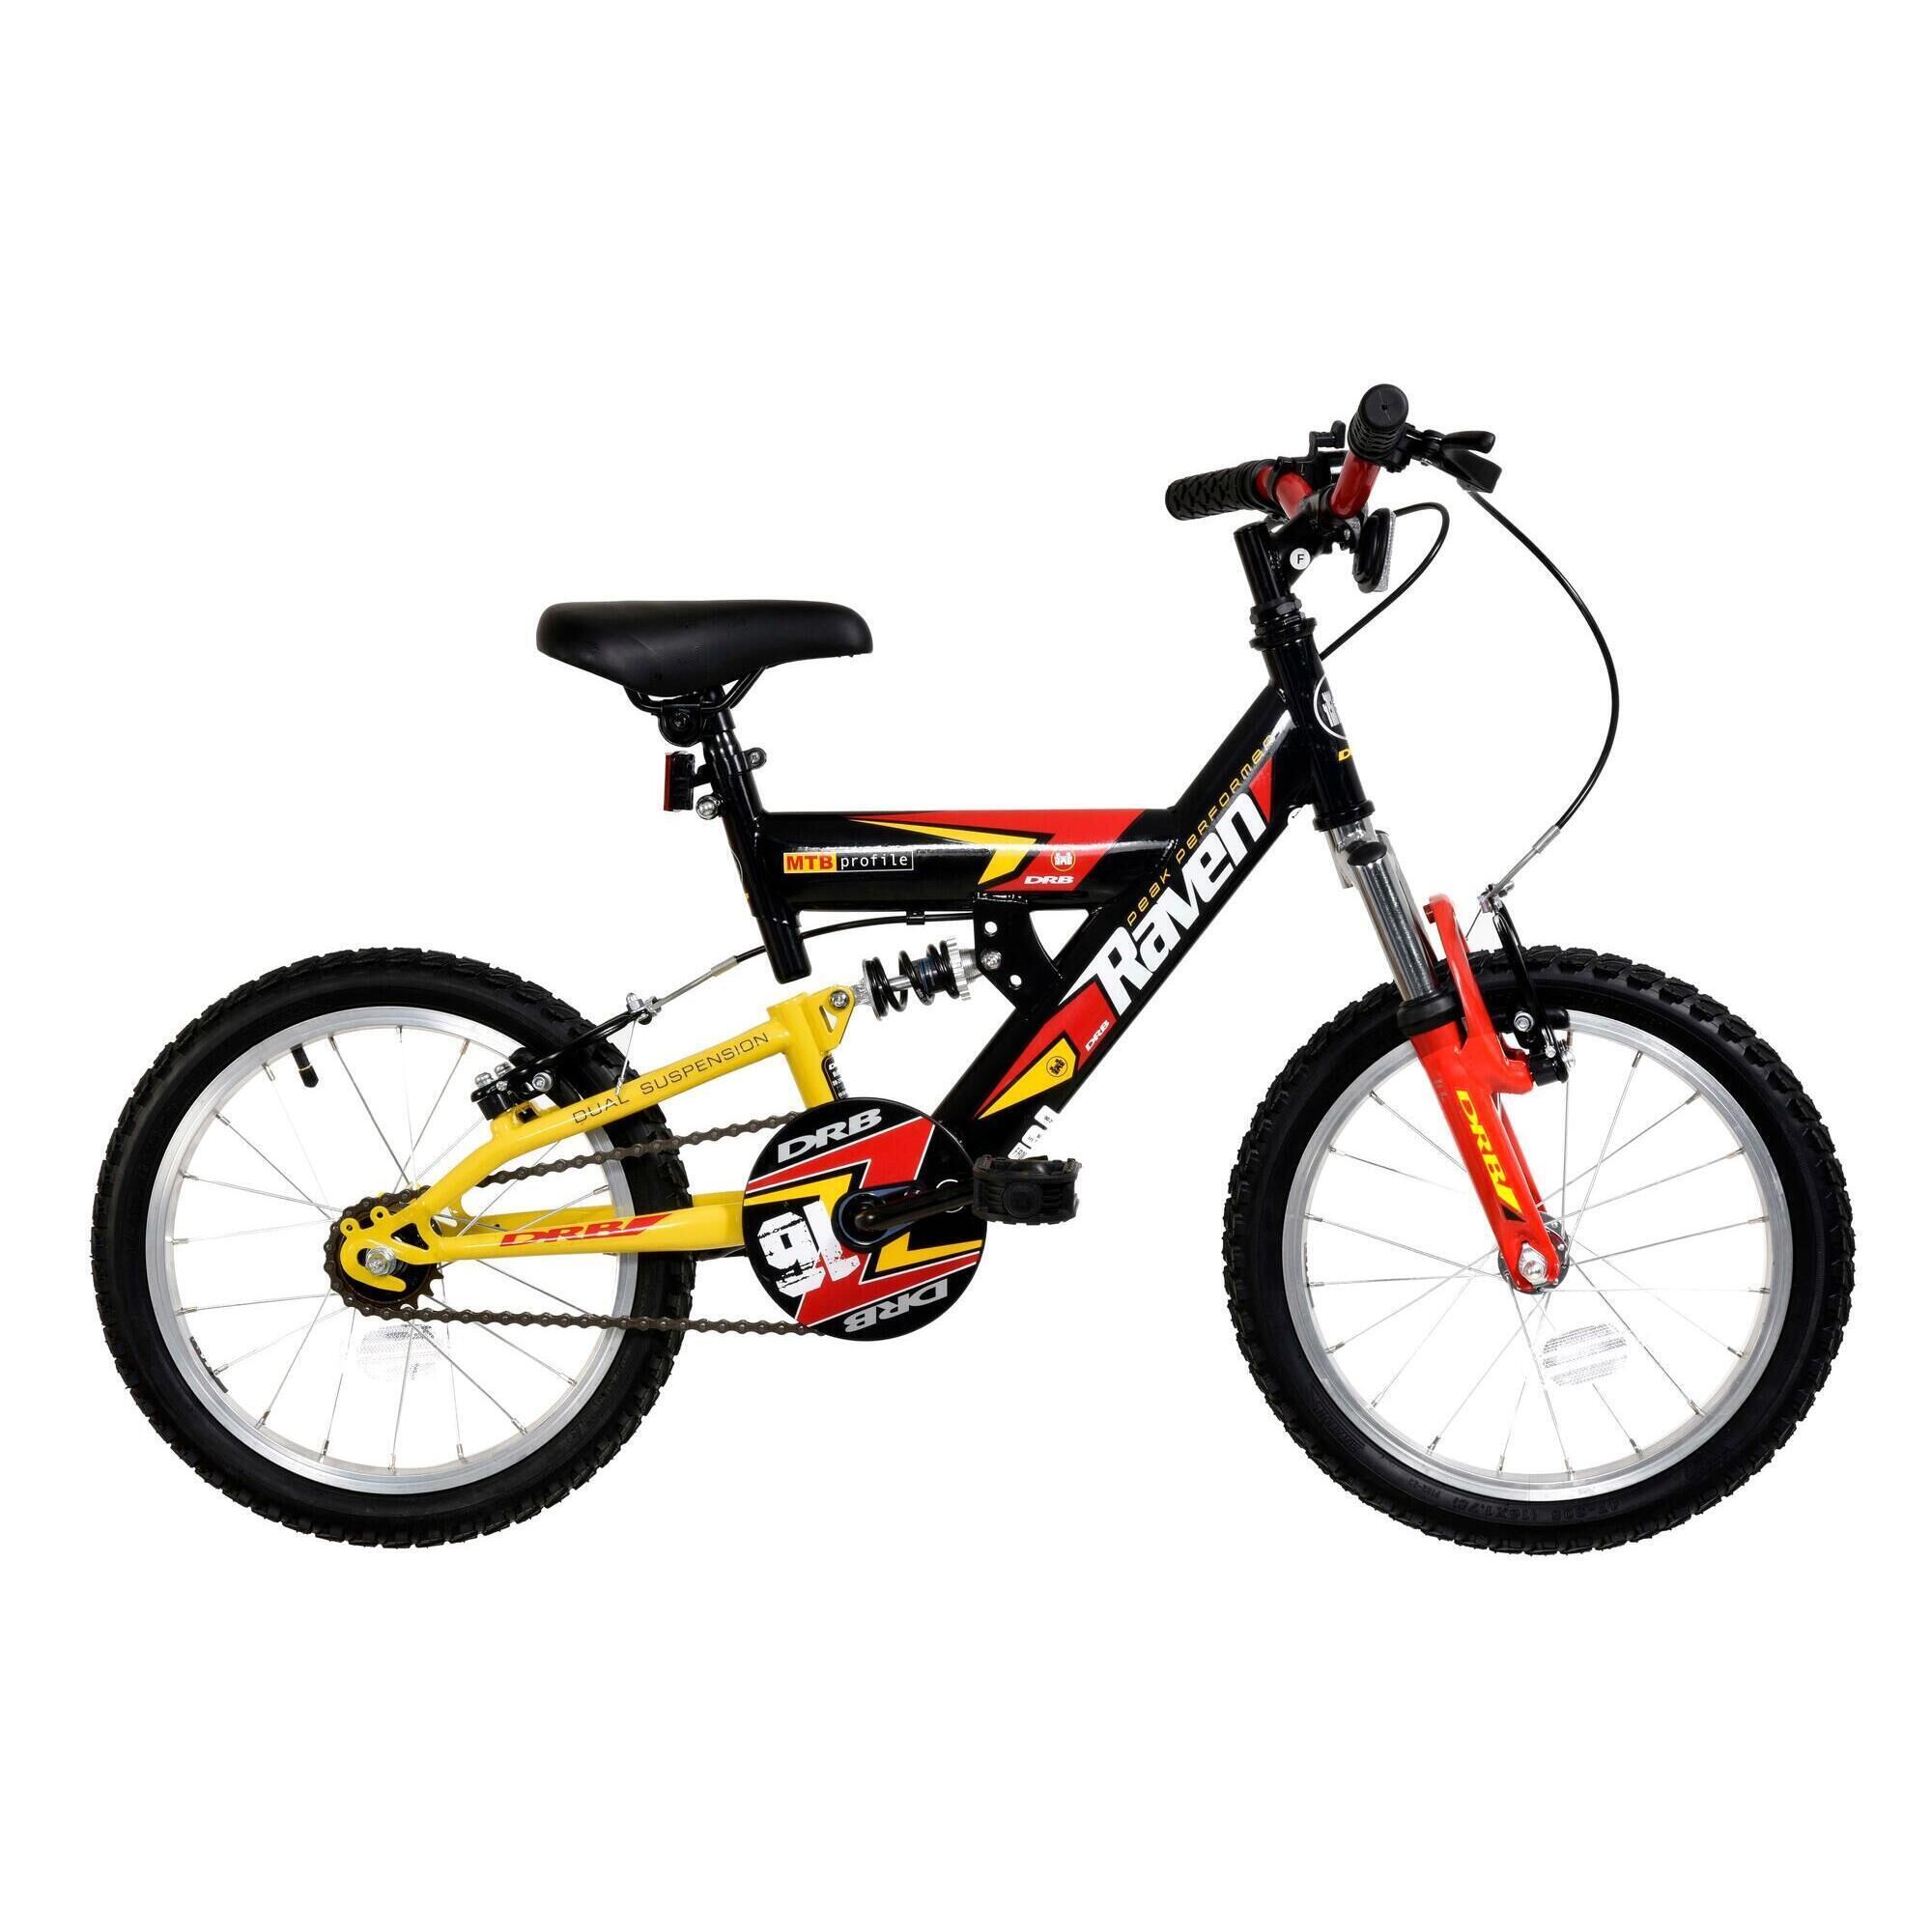 DALLINGRIDGE Dallingridge Raven Boys Full Suspension Mountain Bike, 16" Wheel - Black/Yellow/